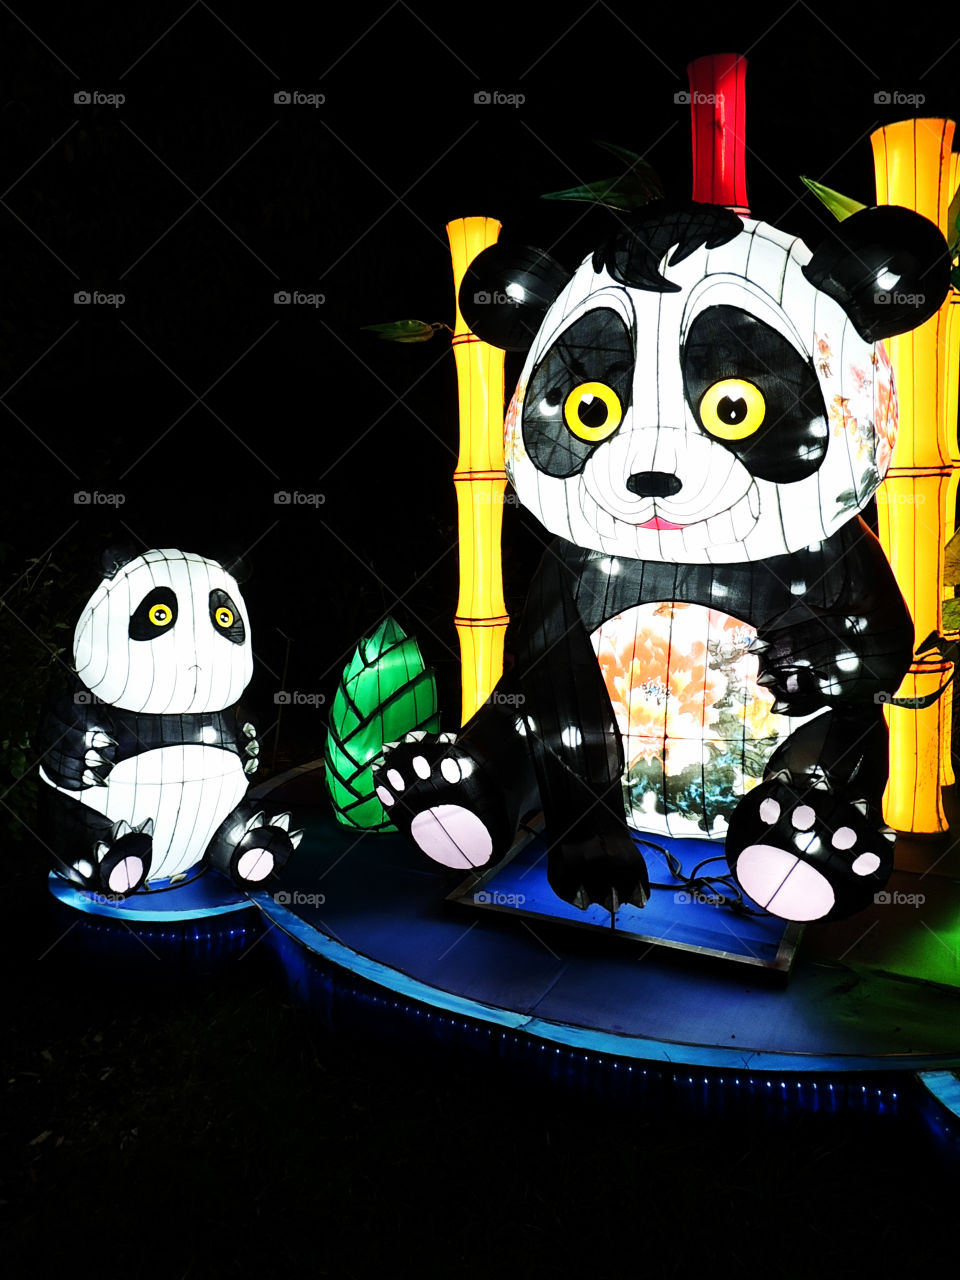 More China Lights & Dancing Pandas 🐼